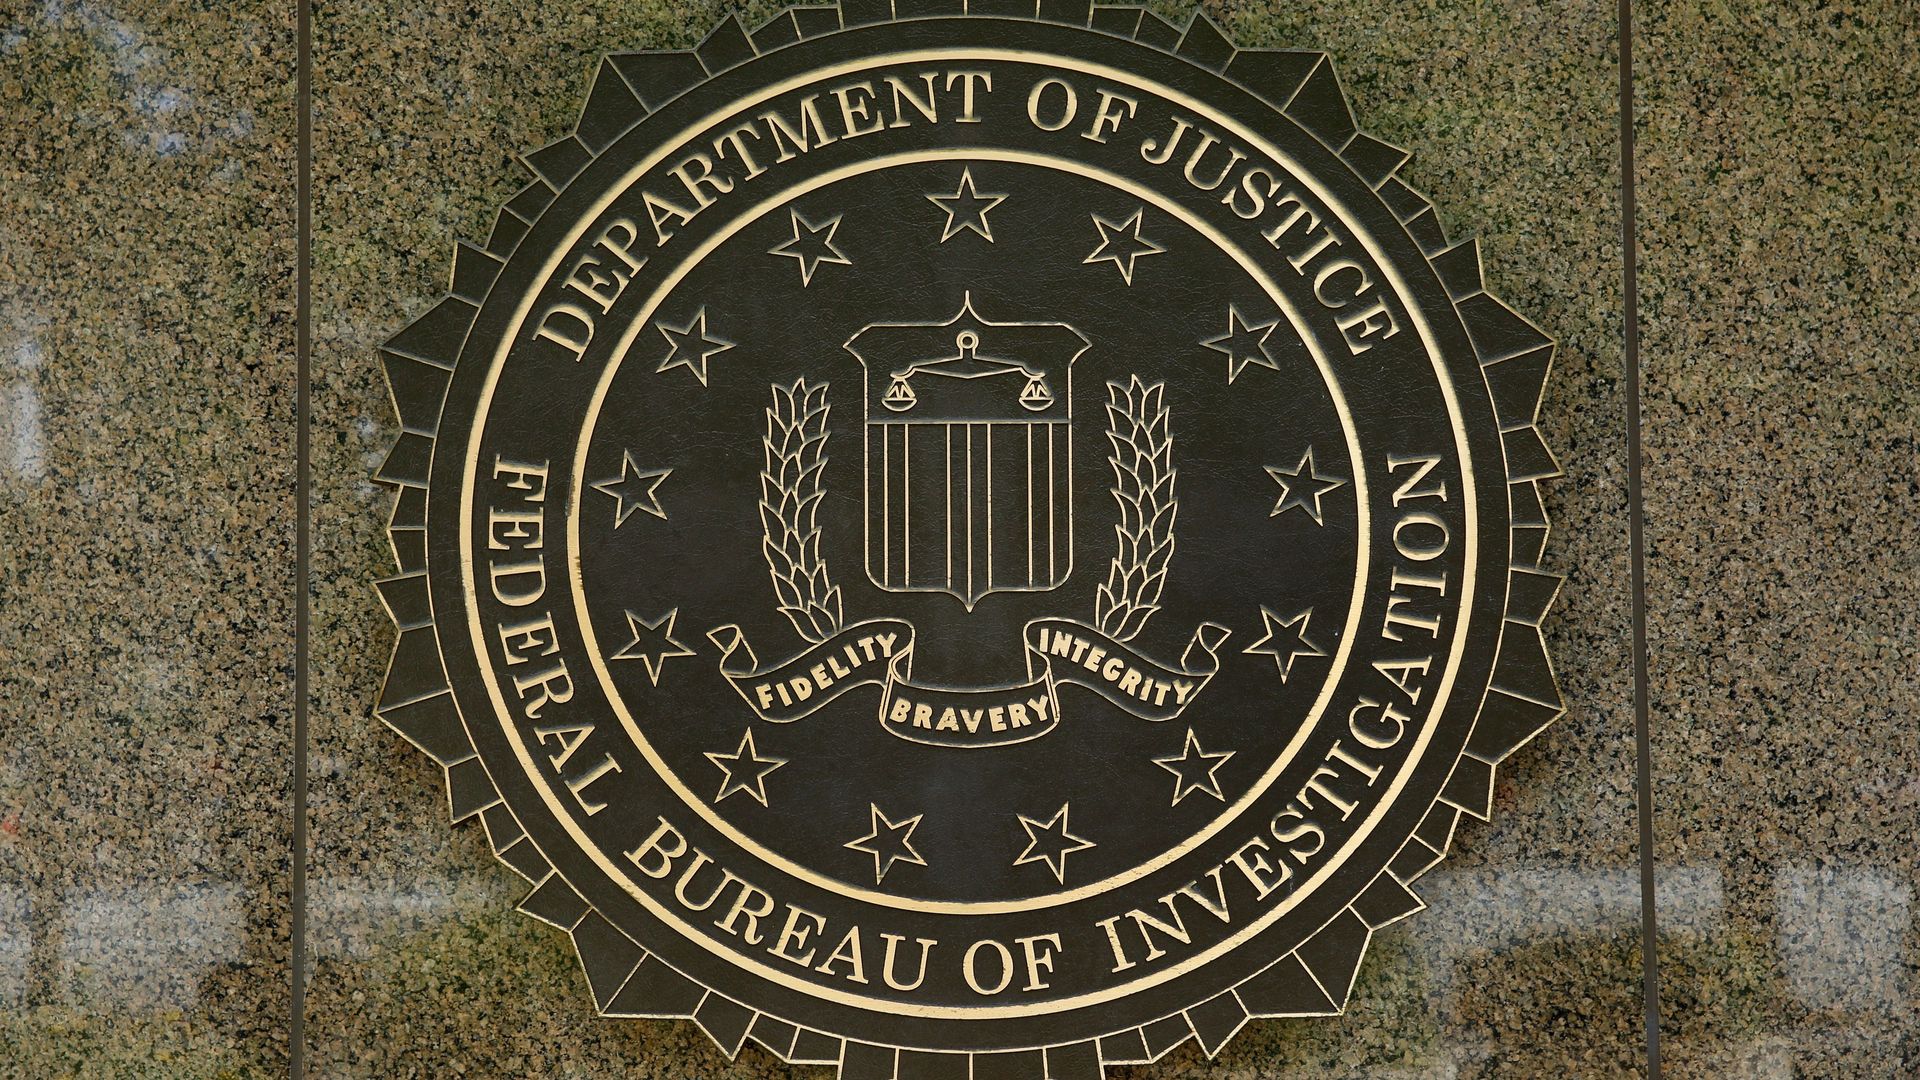 The FBI seal.